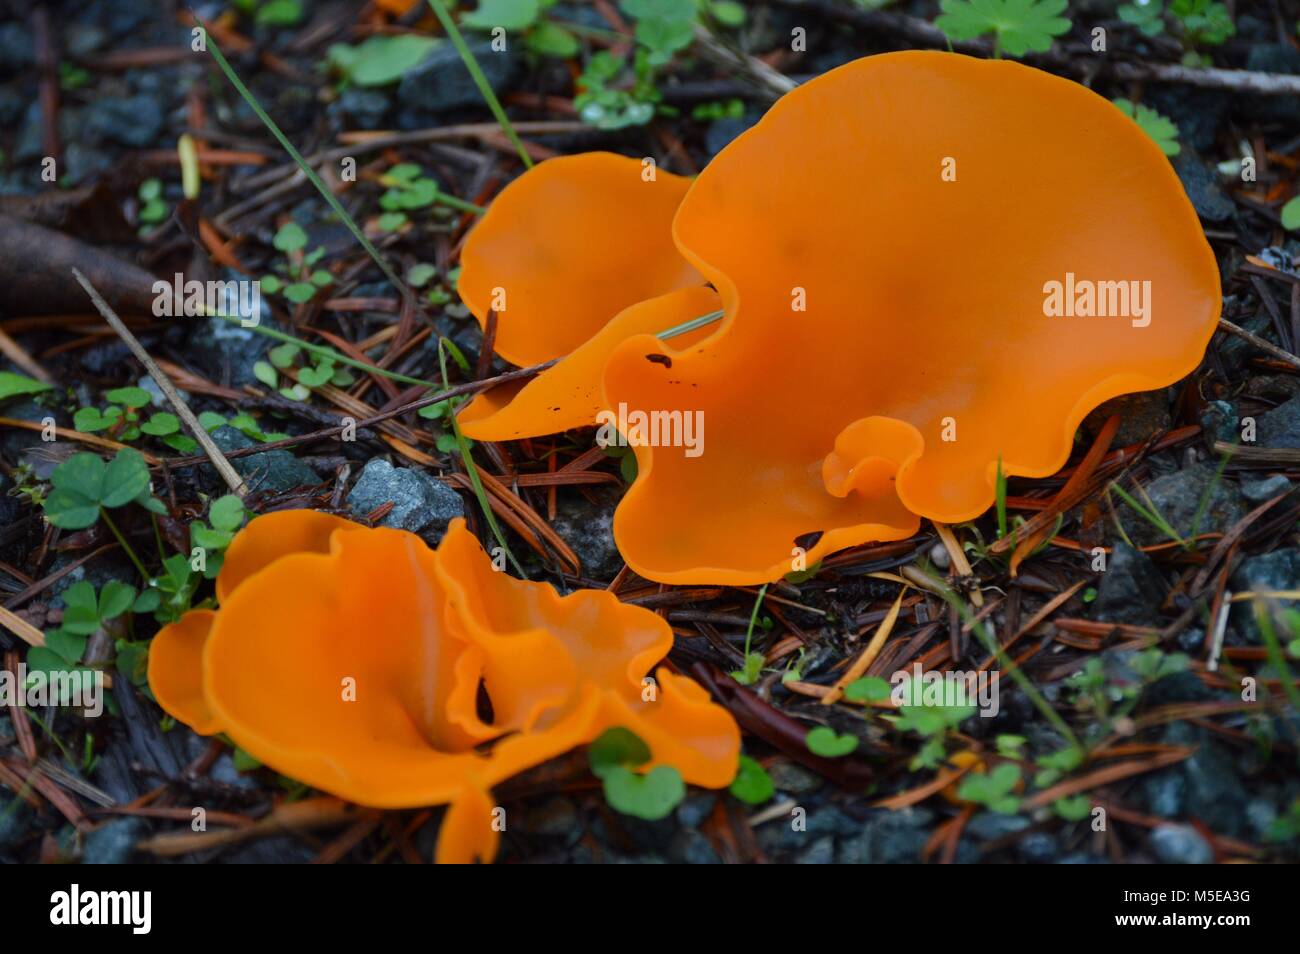 orange peel fungus -Aleuria aurantia- growing on soft forest floor Stock Photo